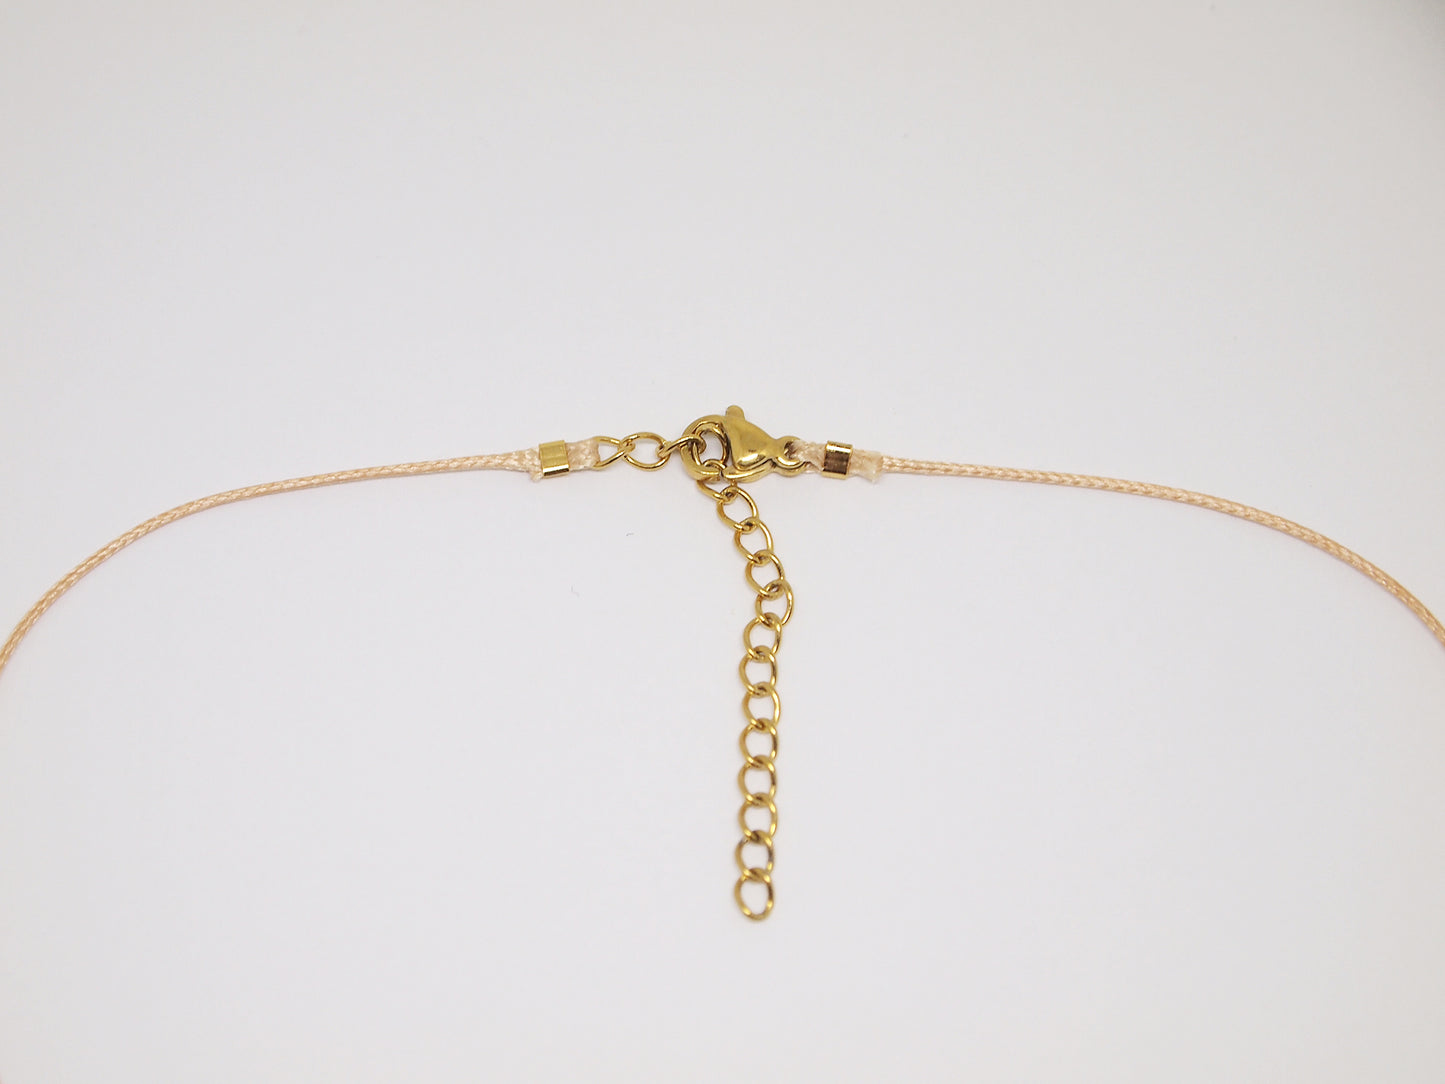 Black tourmaline cord necklace